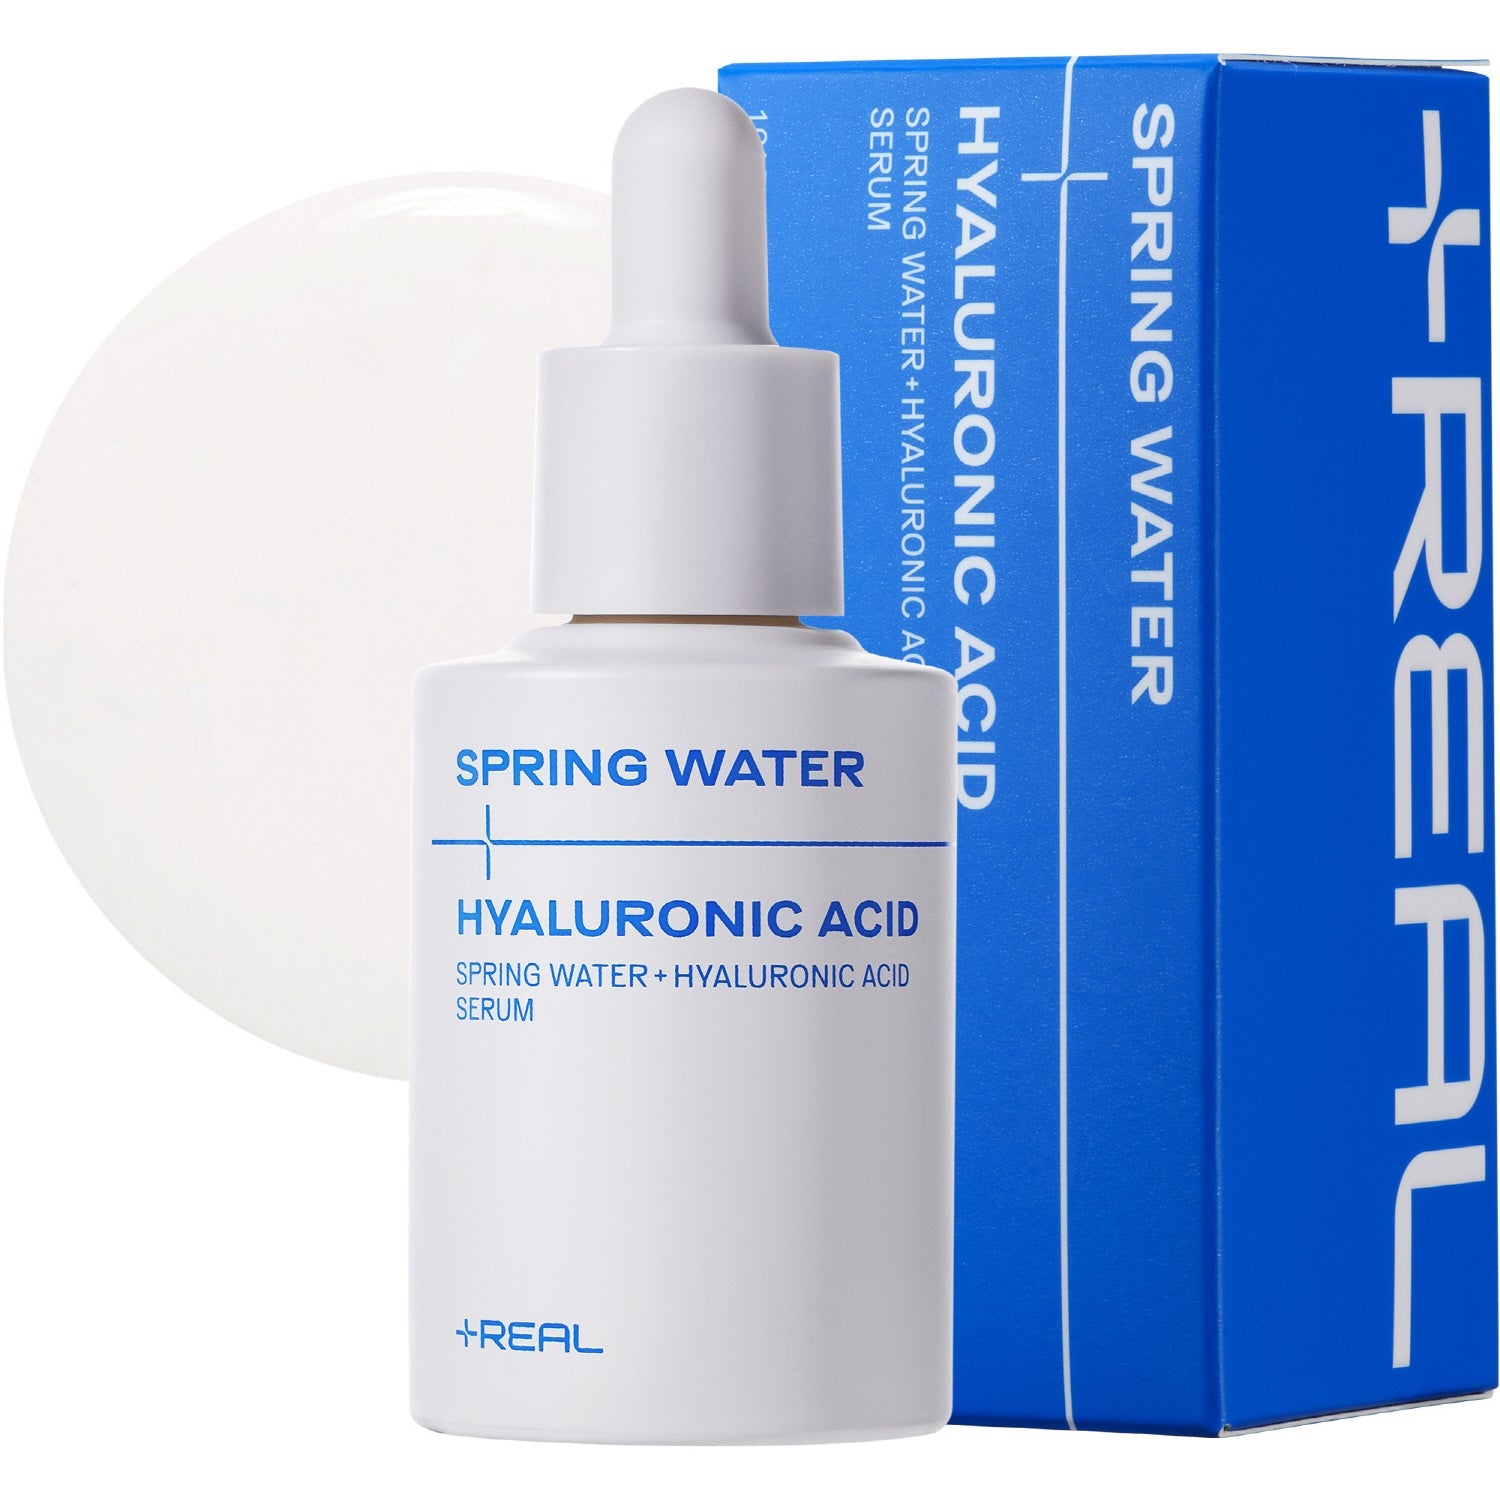 Springwater+Hyaluronic Acid Serum - PLUSREAL